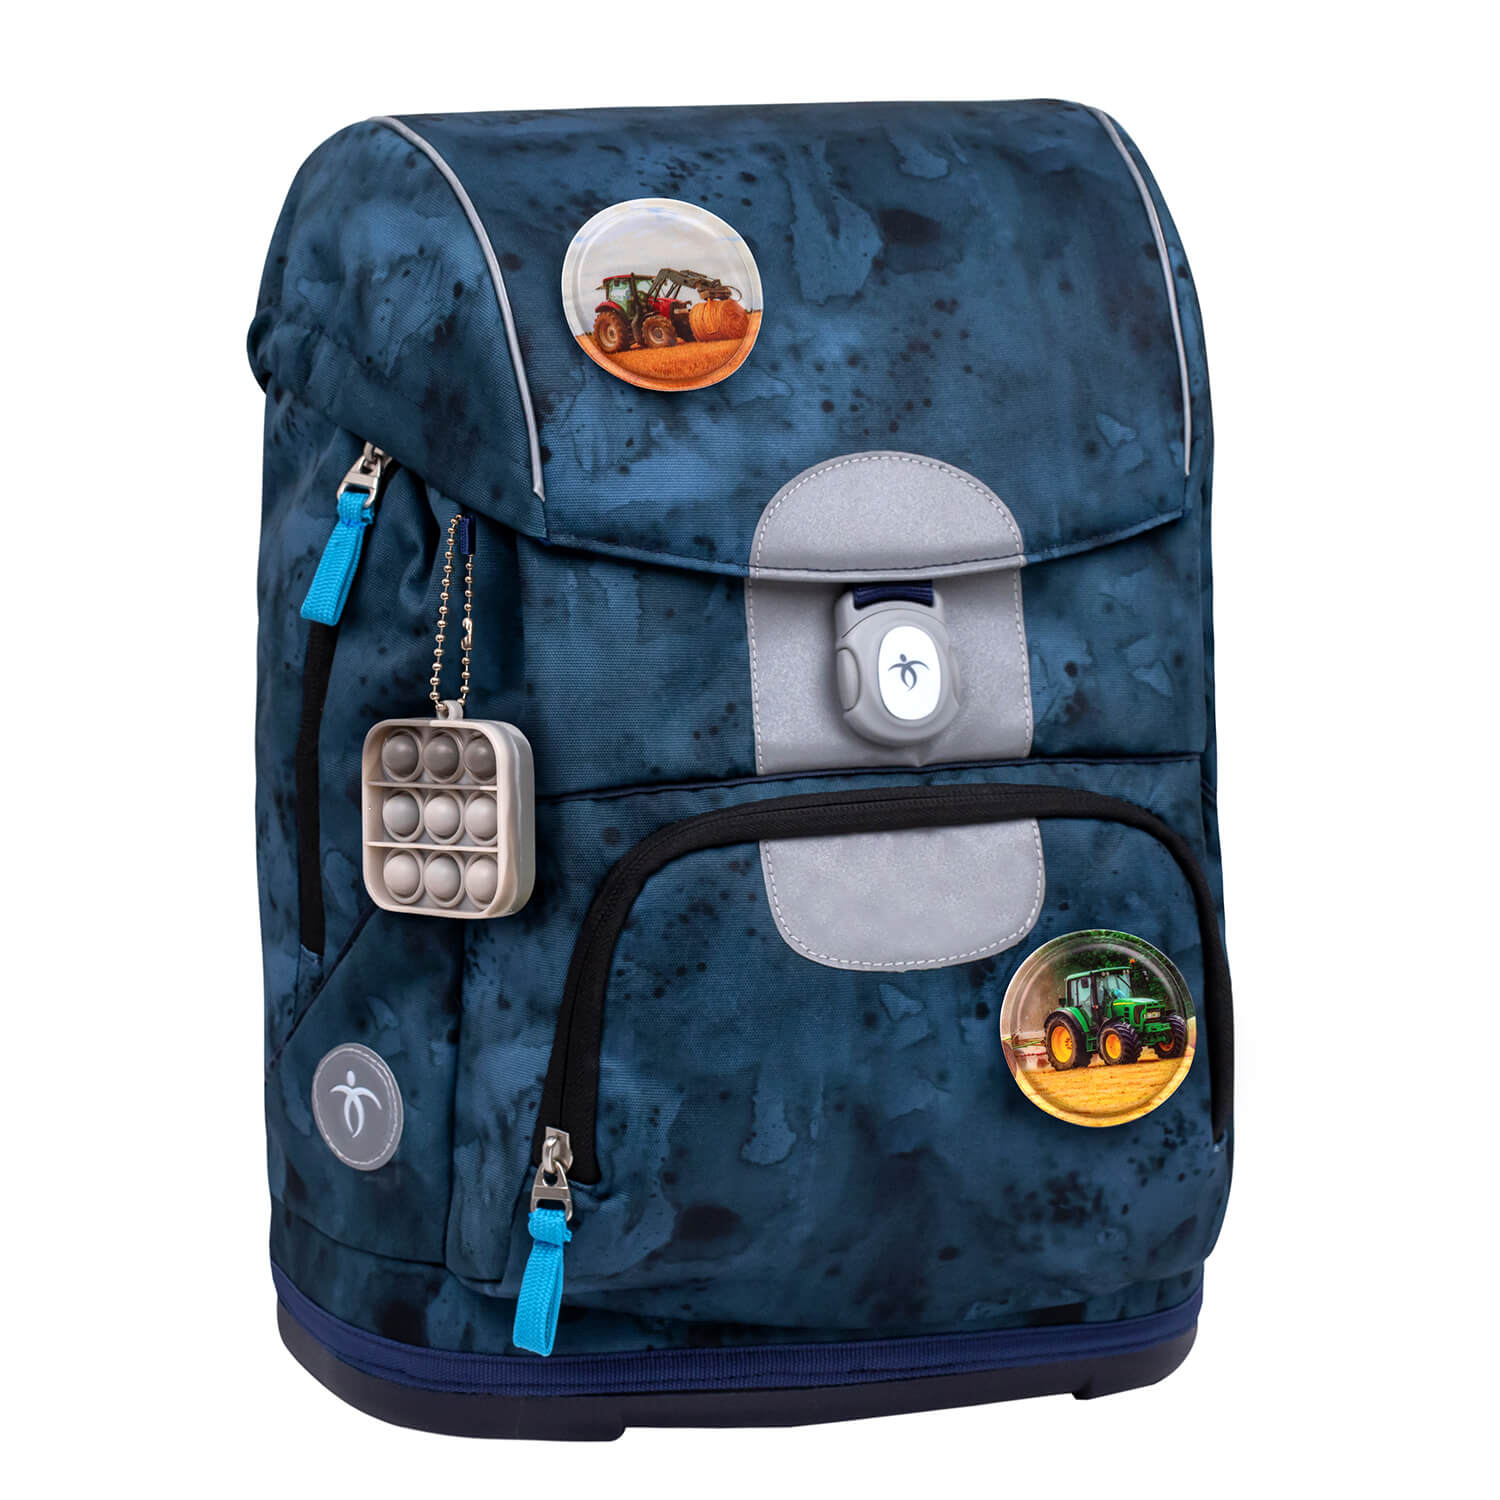 Motion Blue Splash schoolbag set 6 pcs with GRATIS keychain